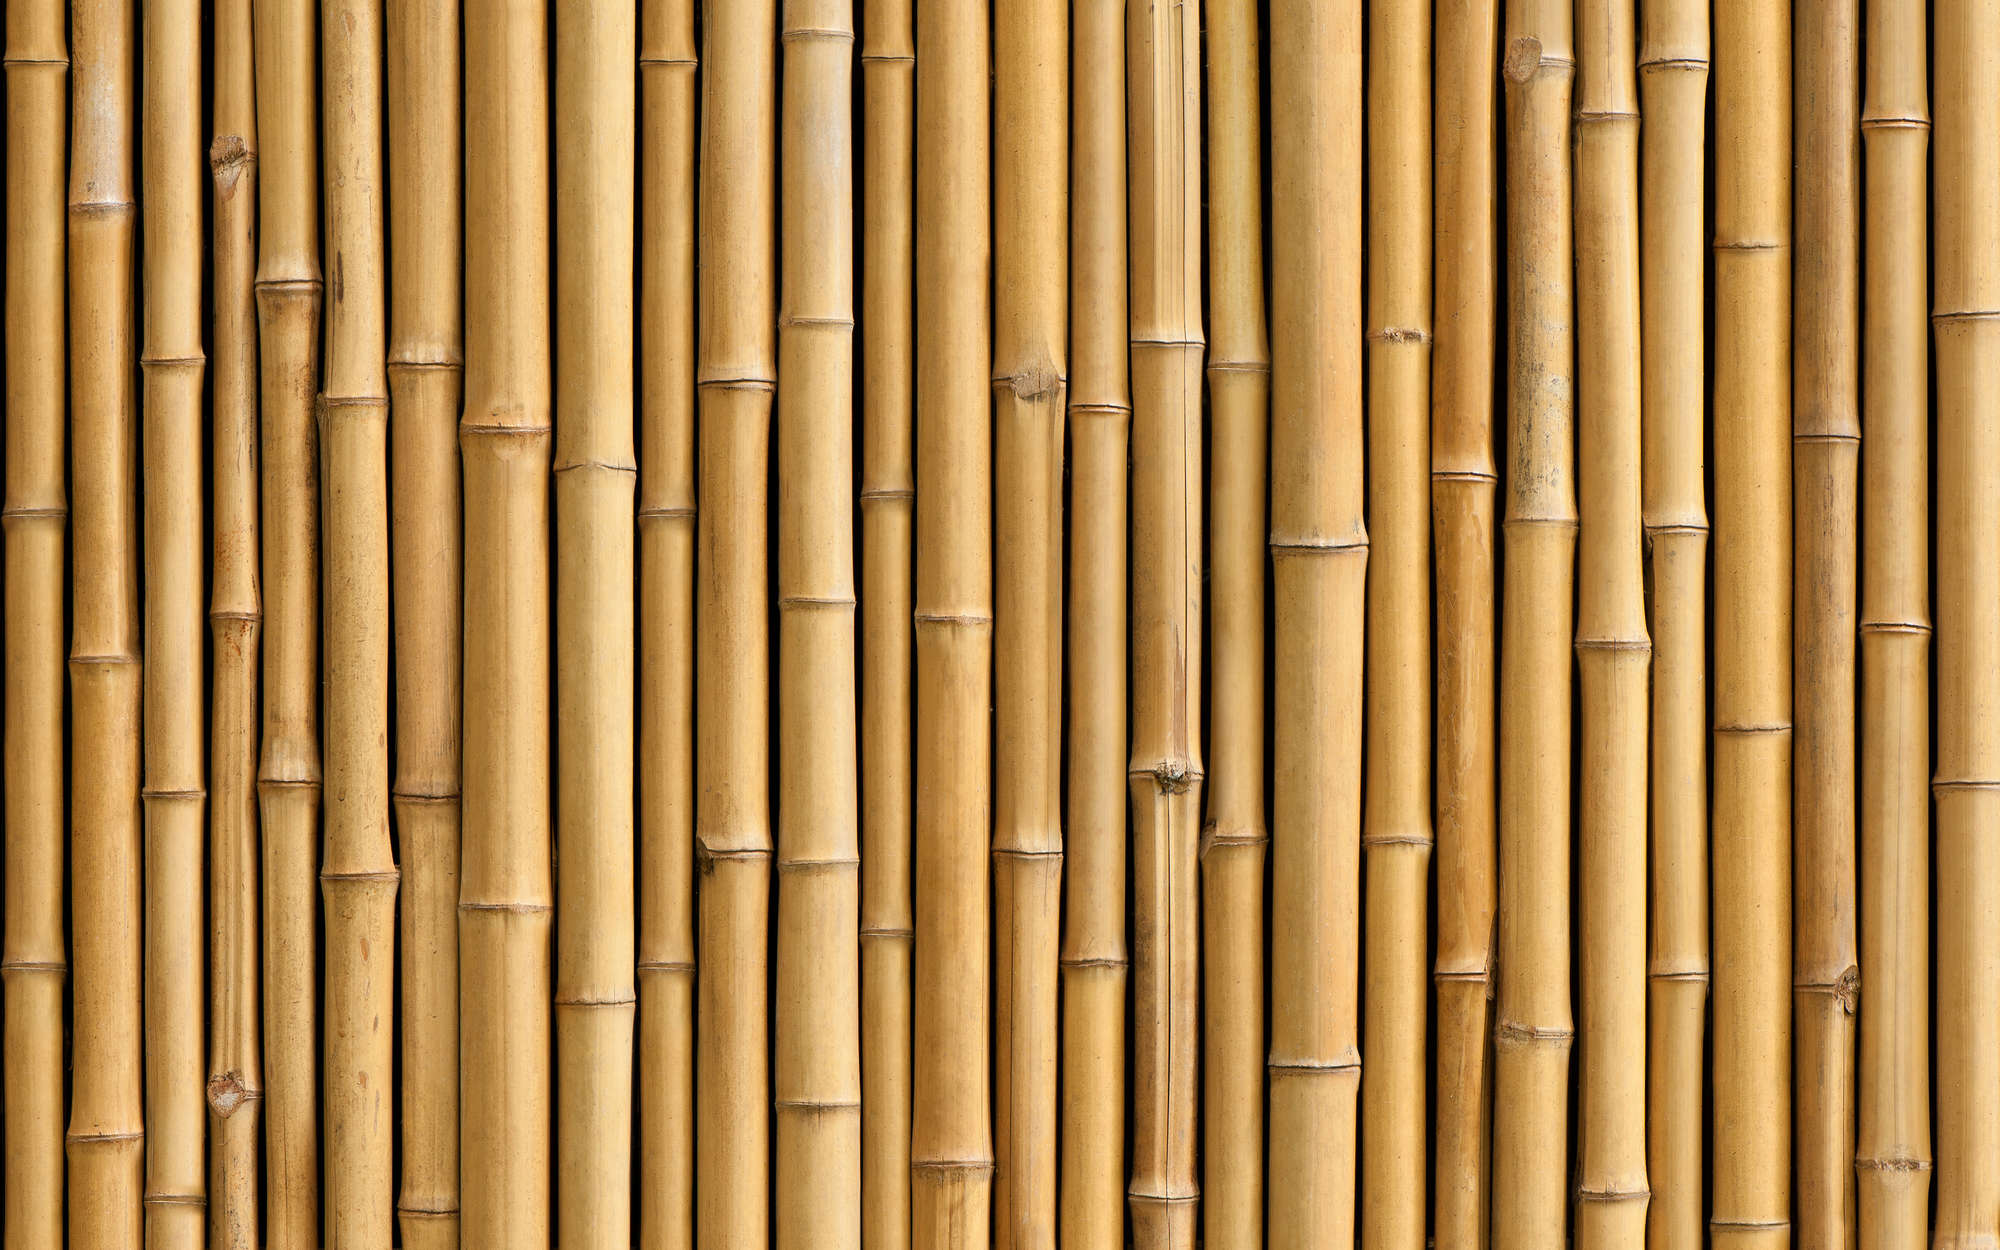             Fototapete Wand aus Bambus in Beige – Mattes Glattvlies
        